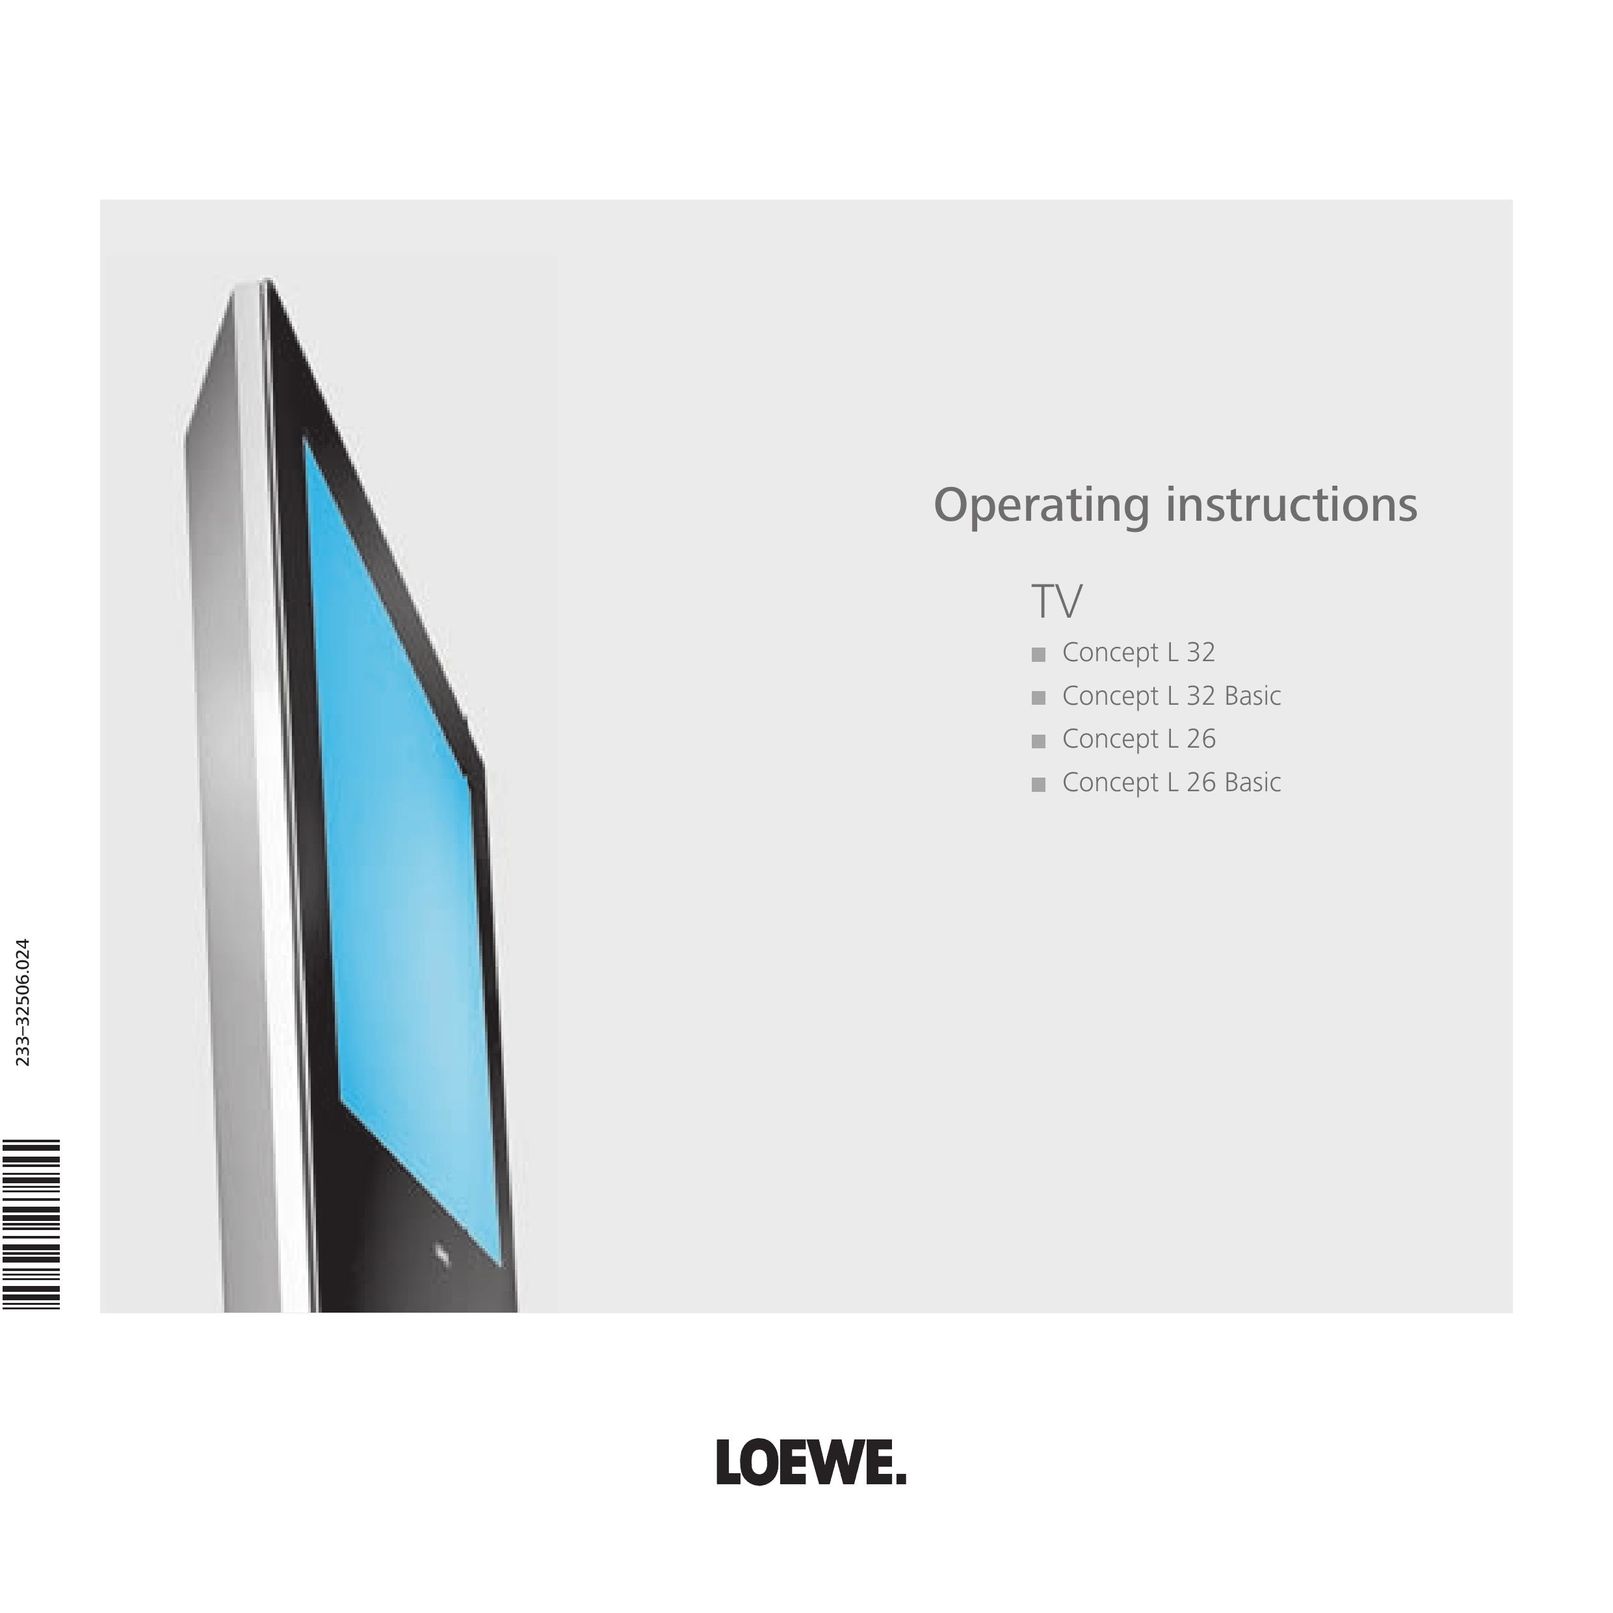 Loewe ConceptL32 Flat Panel Television User Manual